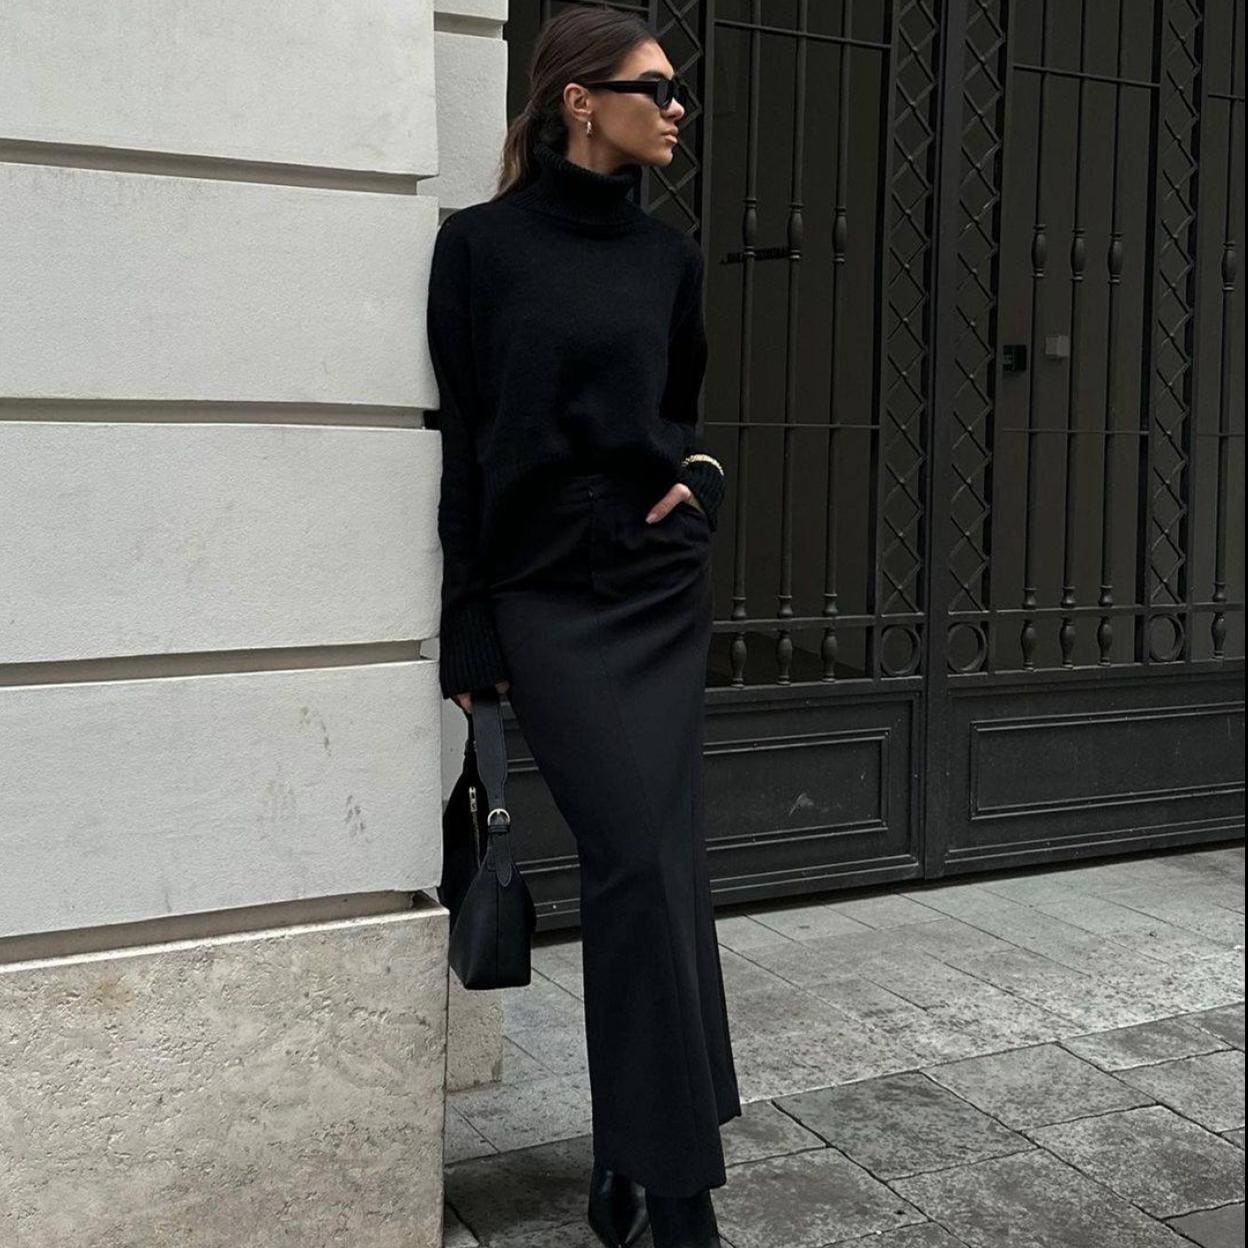 Falda negra corta elegante